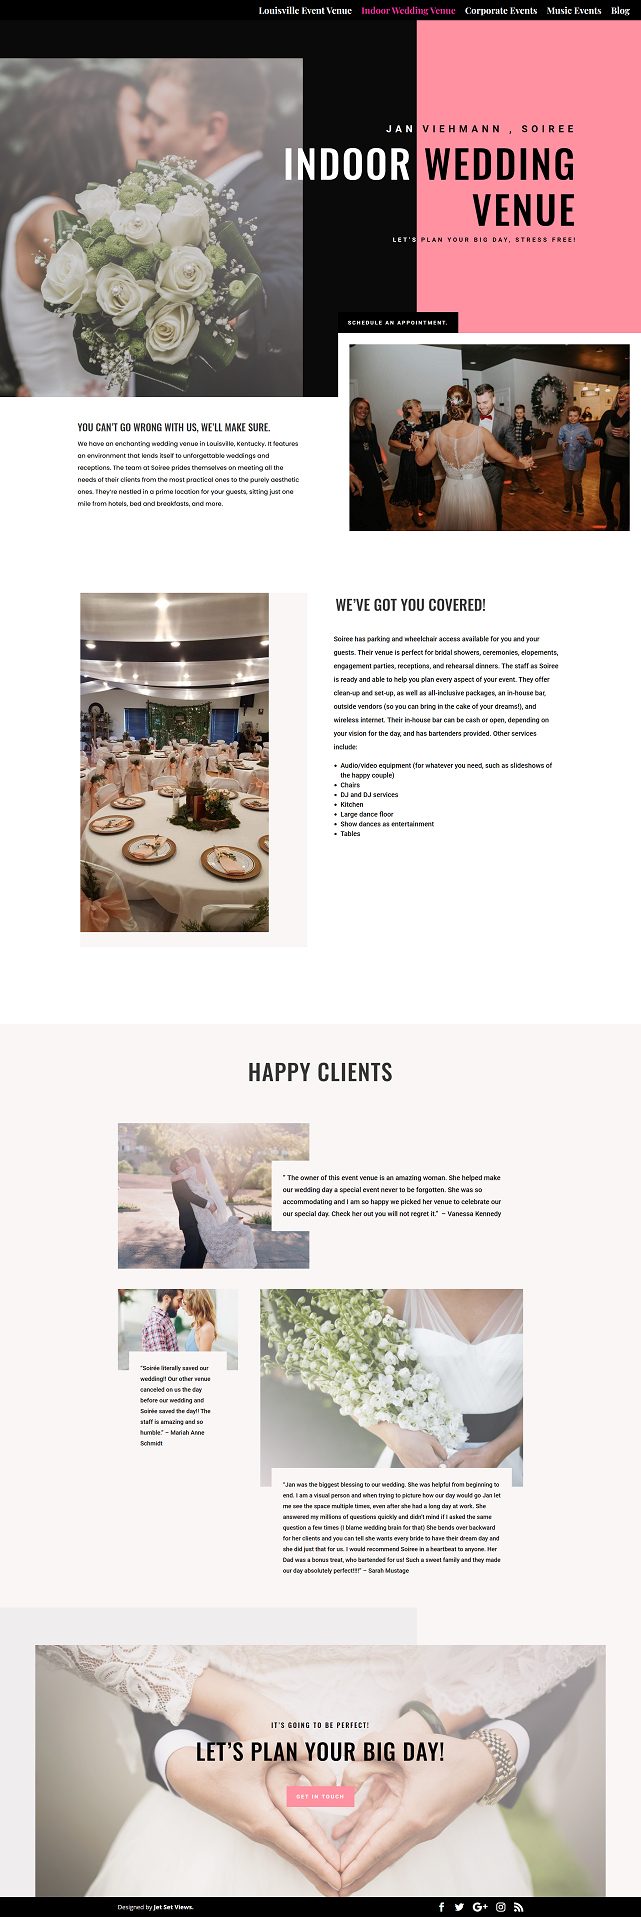 Web Page Design Portfolio Piece of a Wedding Venue In Louisville Kentucky.